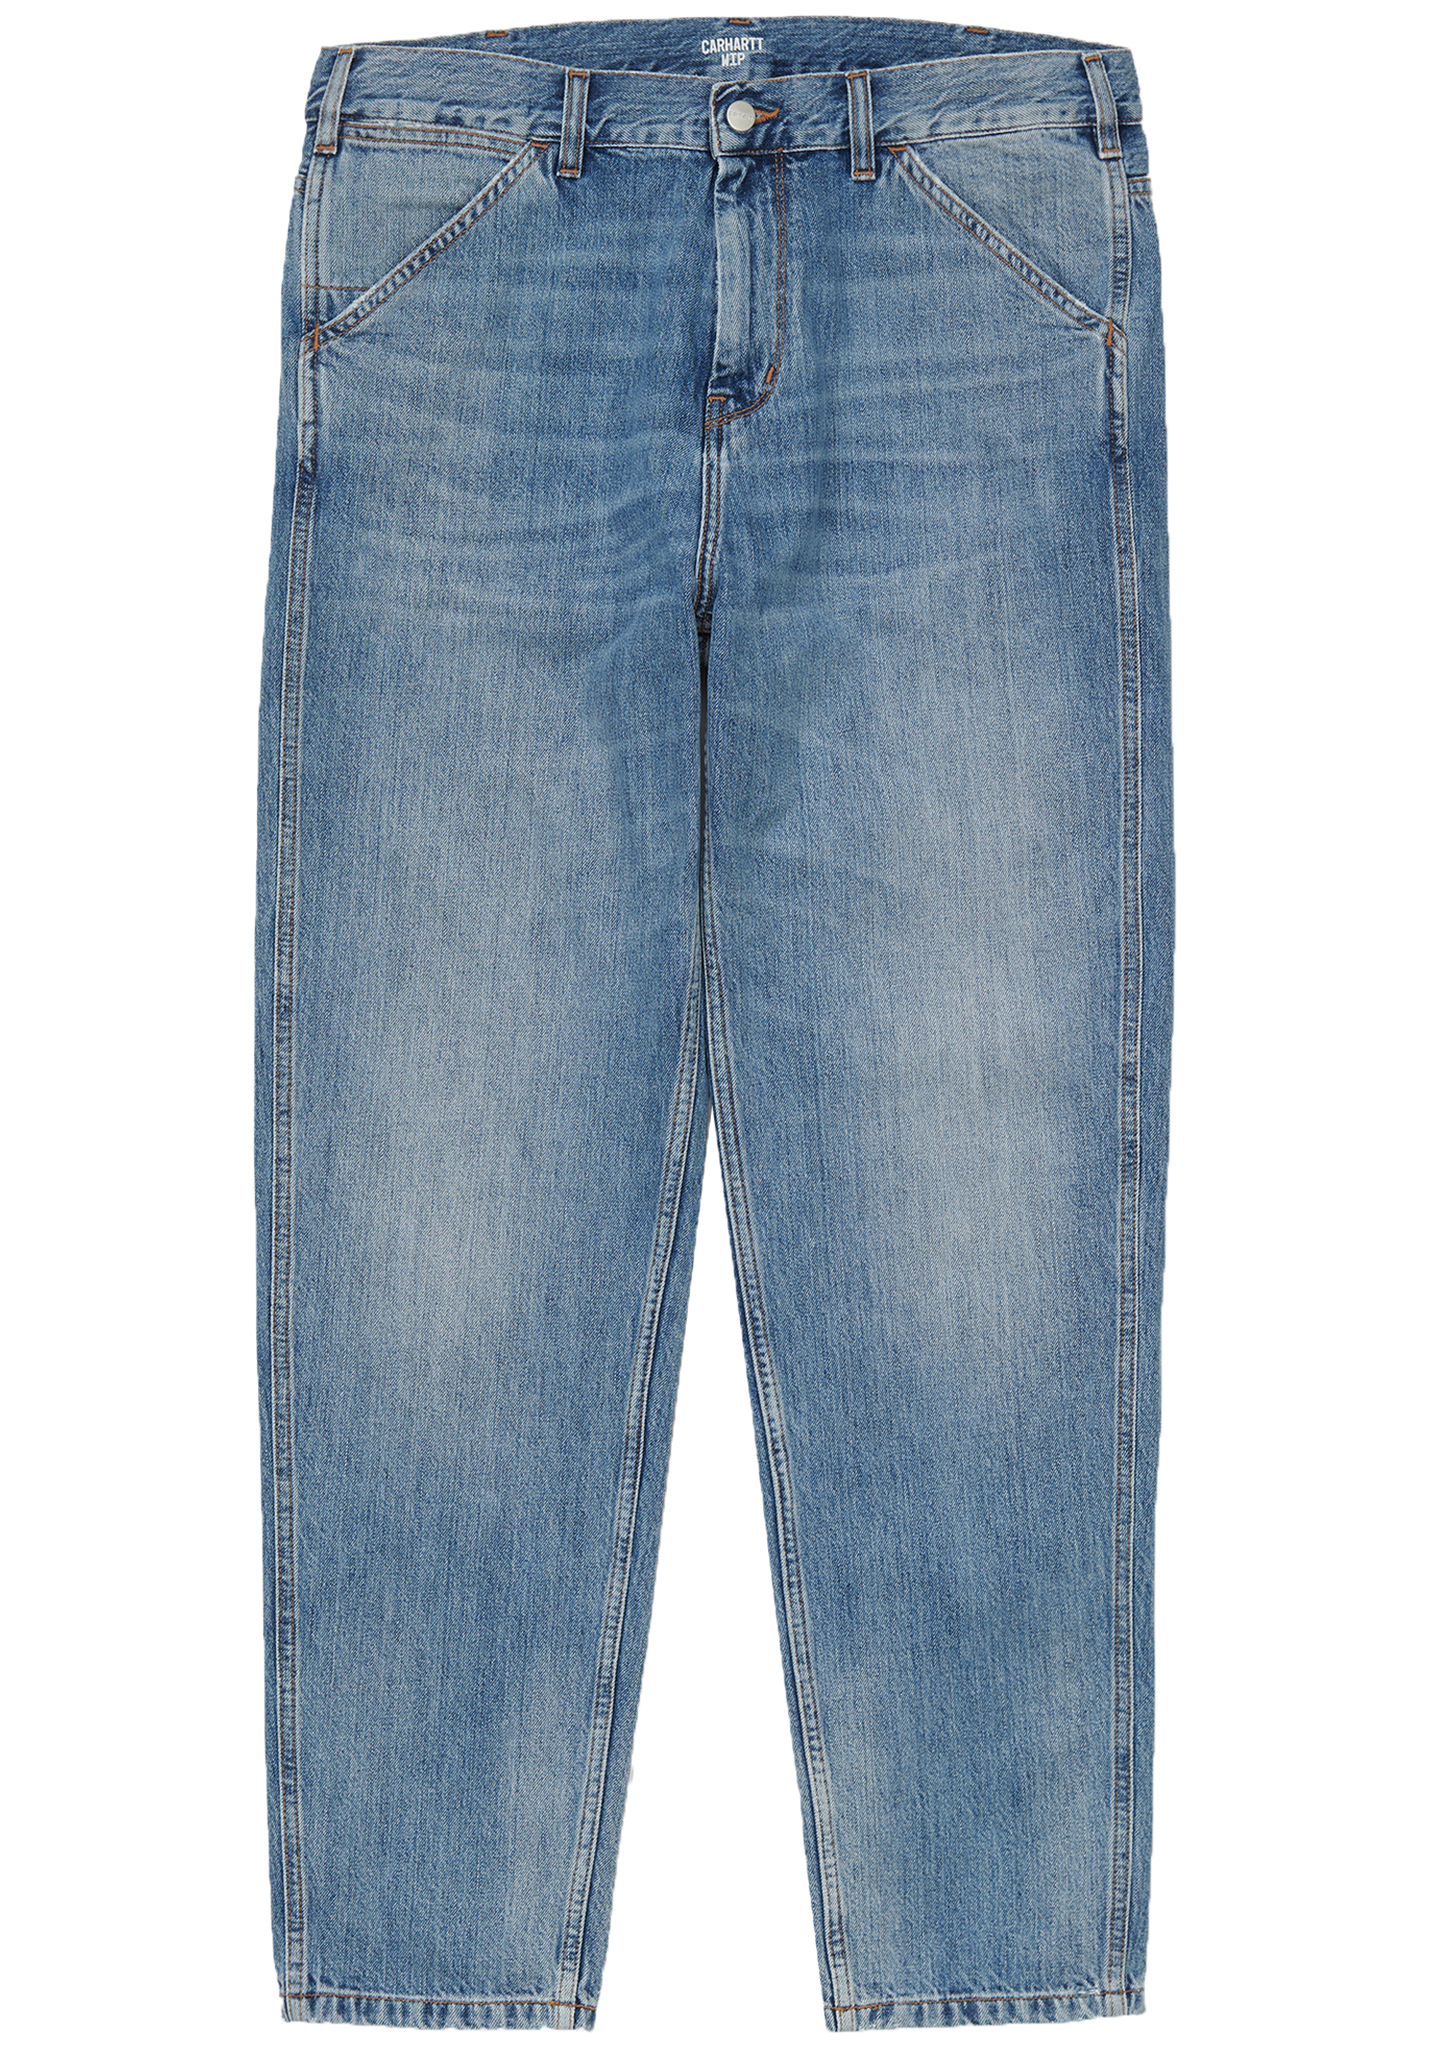 Carhartt WIP Jacob Jeans jeans 34/XX